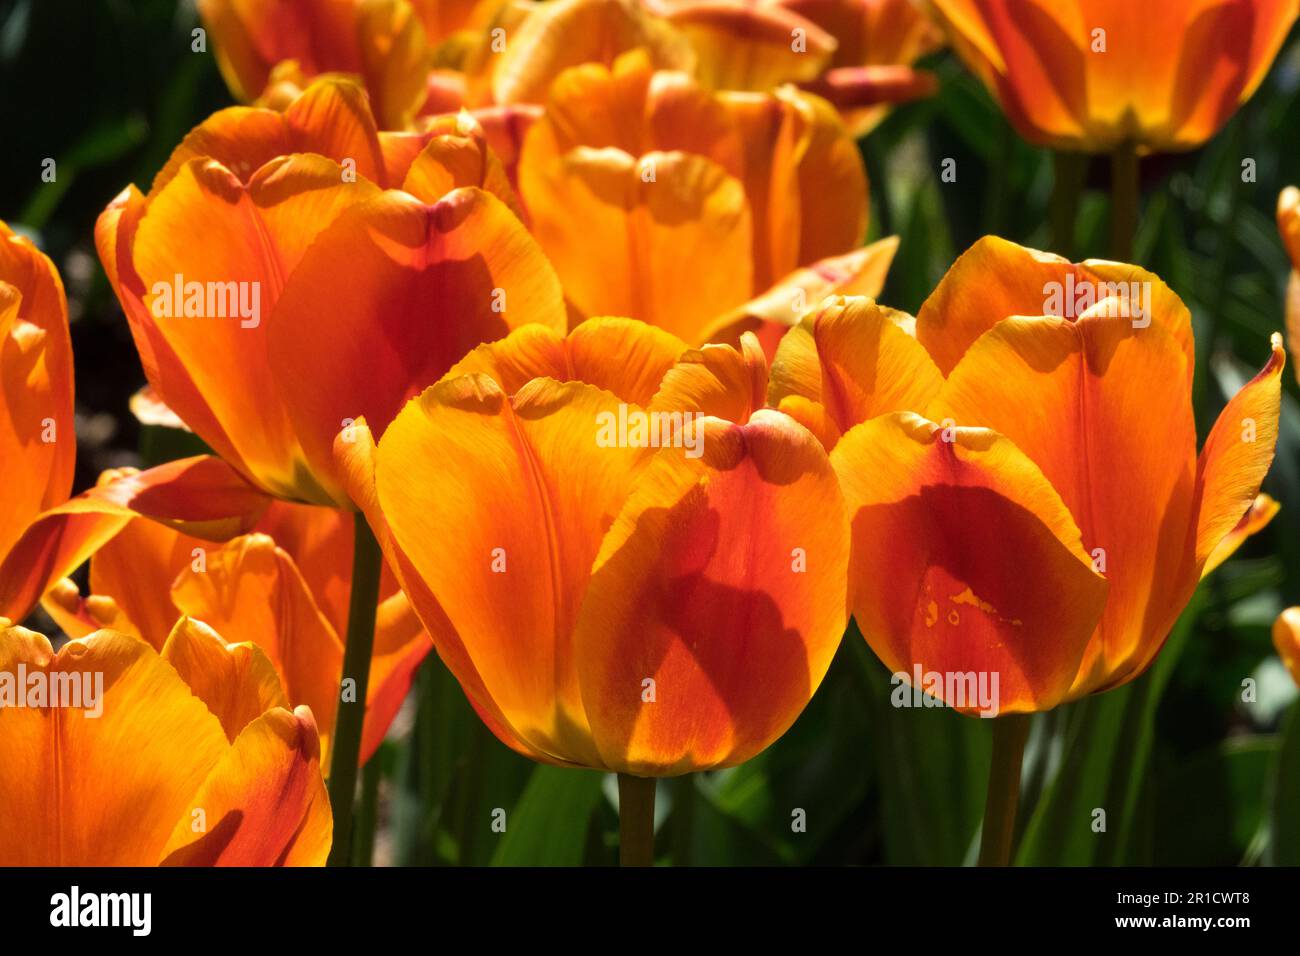 Orange Tulips, Flowers 'Tulipa Cash', Orange Garden Tulips Beautiful Darwin hybrid Group, Spring Stock Photo